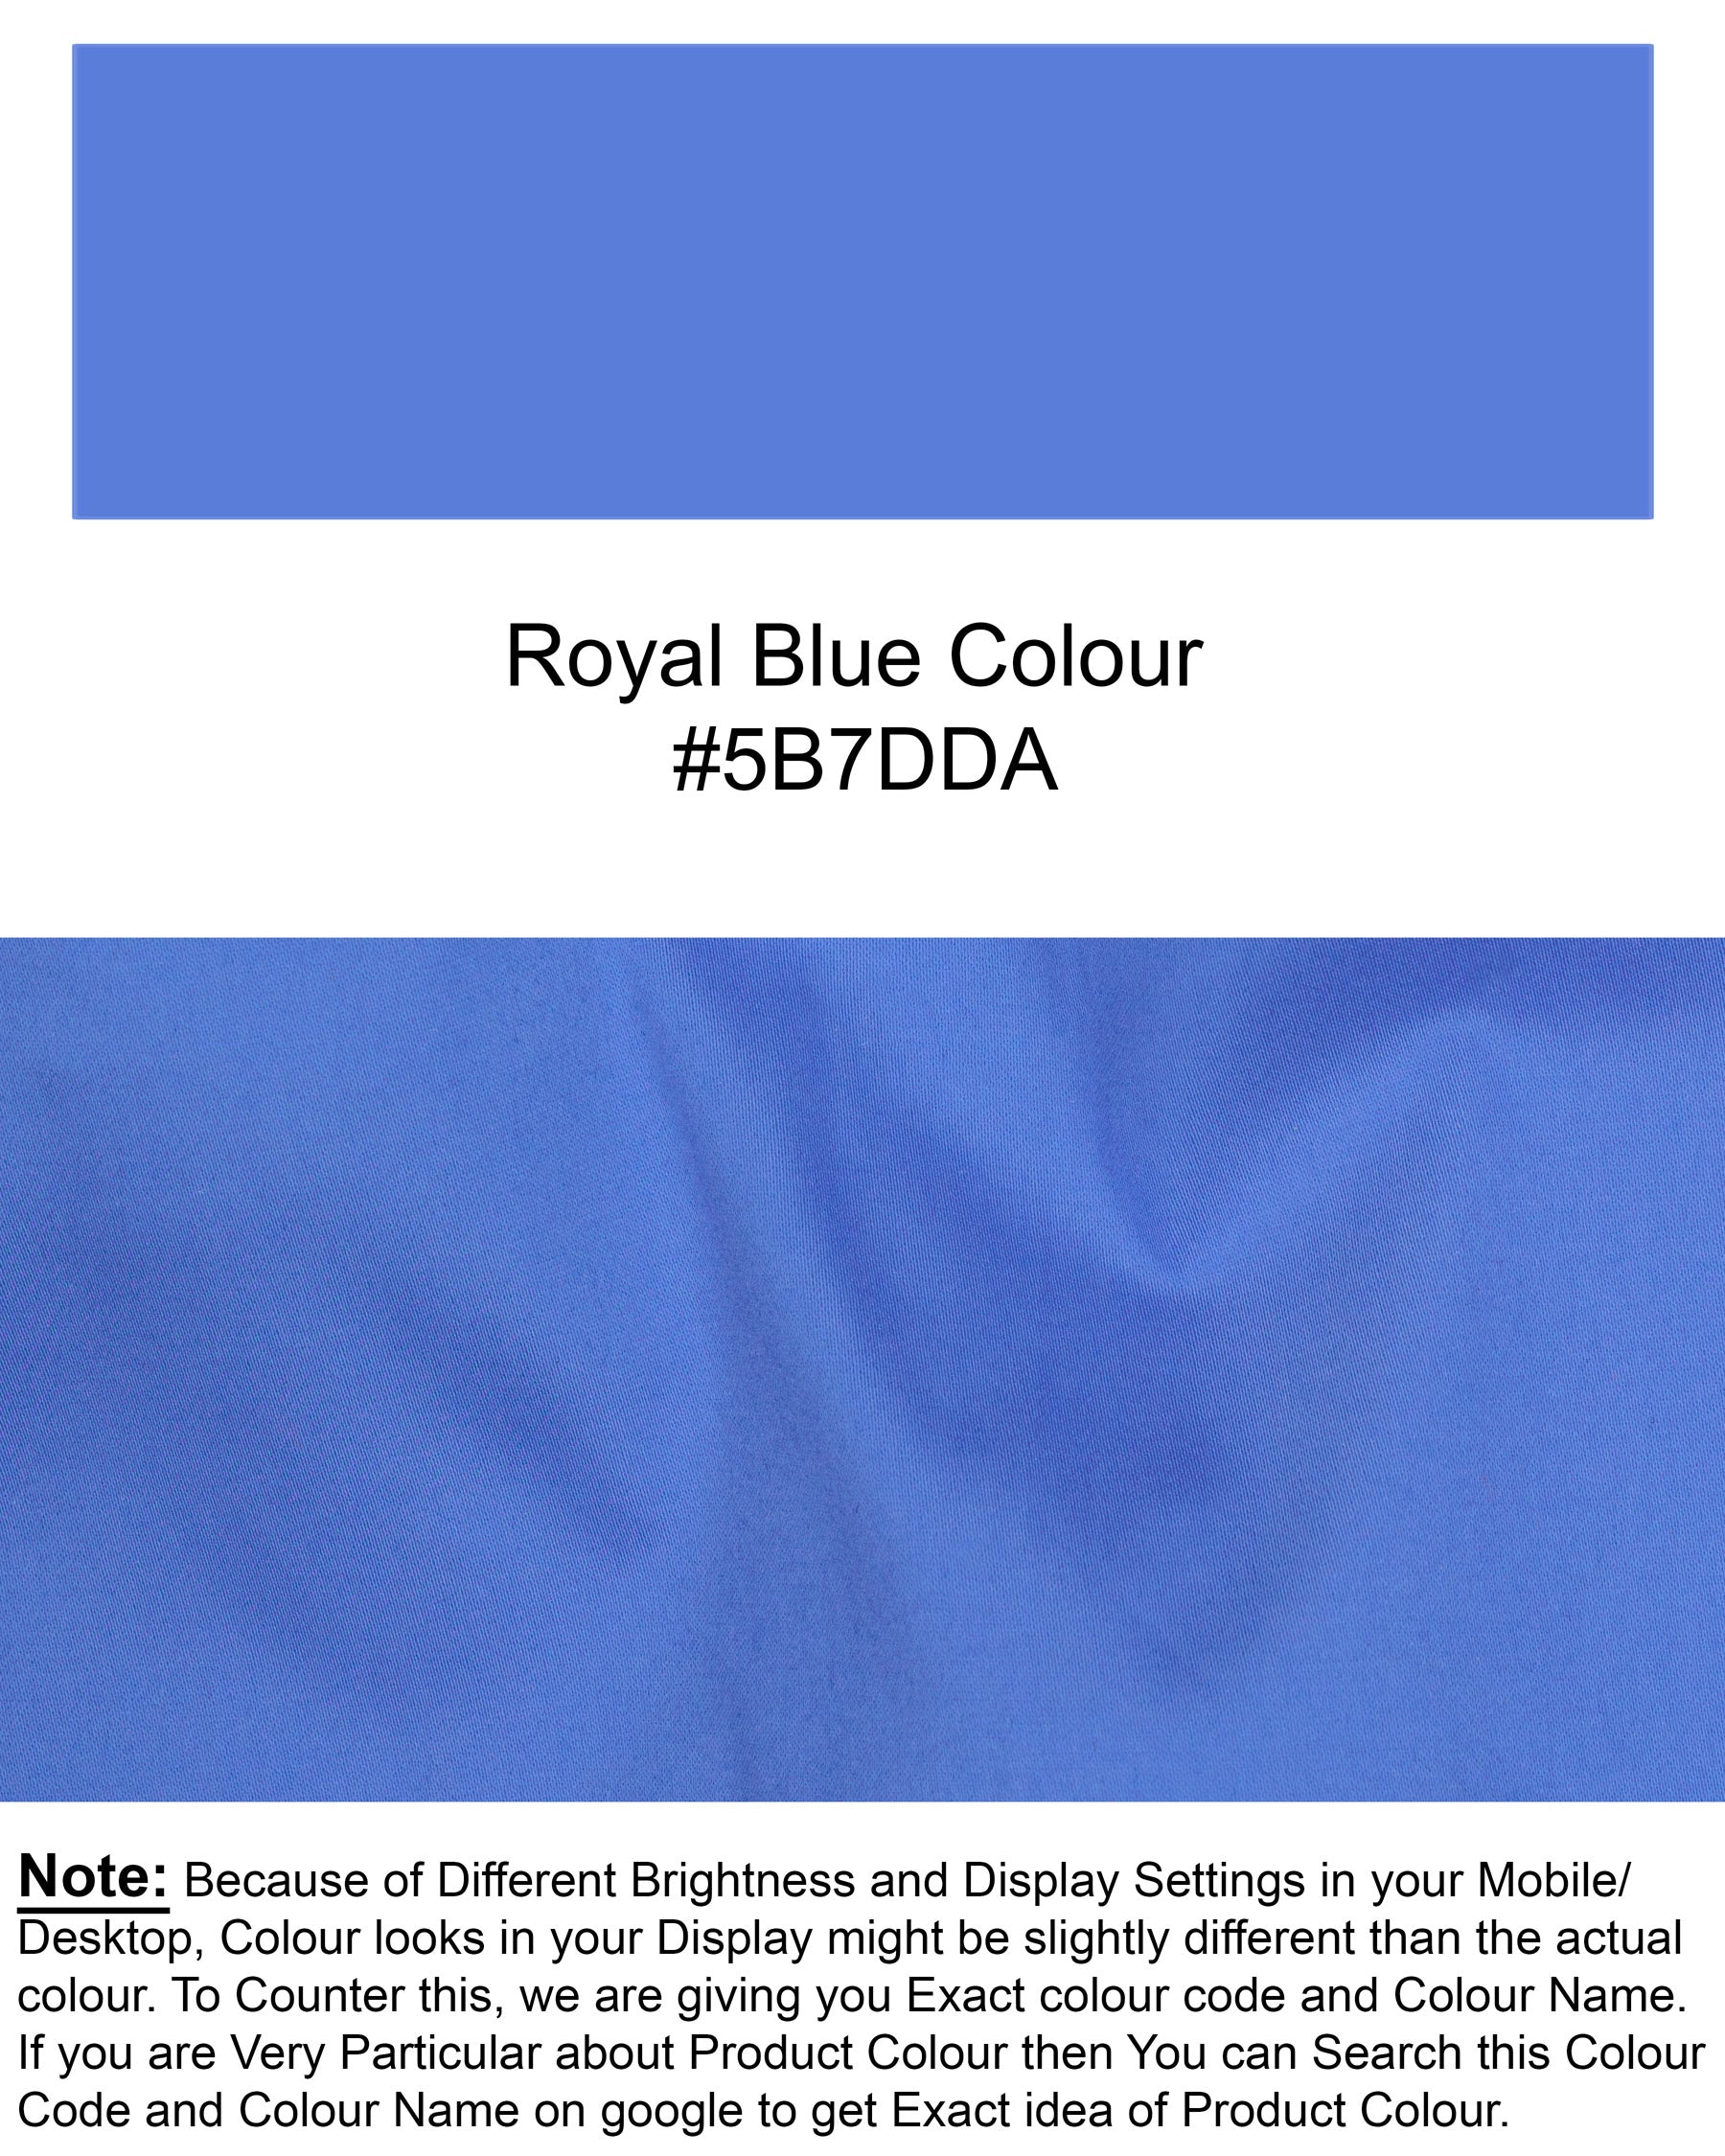 Royal Blue Premium Cotton Blazer BL1550-SB-36, BL1550-SB-38, BL1550-SB-40, BL1550-SB-42, BL1550-SB-44, BL1550-SB-46, BL1550-SB-48, BL1550-SB-50, BL1550-SB-52, BL1550-SB-54, BL1550-SB-56, BL1550-SB-58, BL1550-SB-60